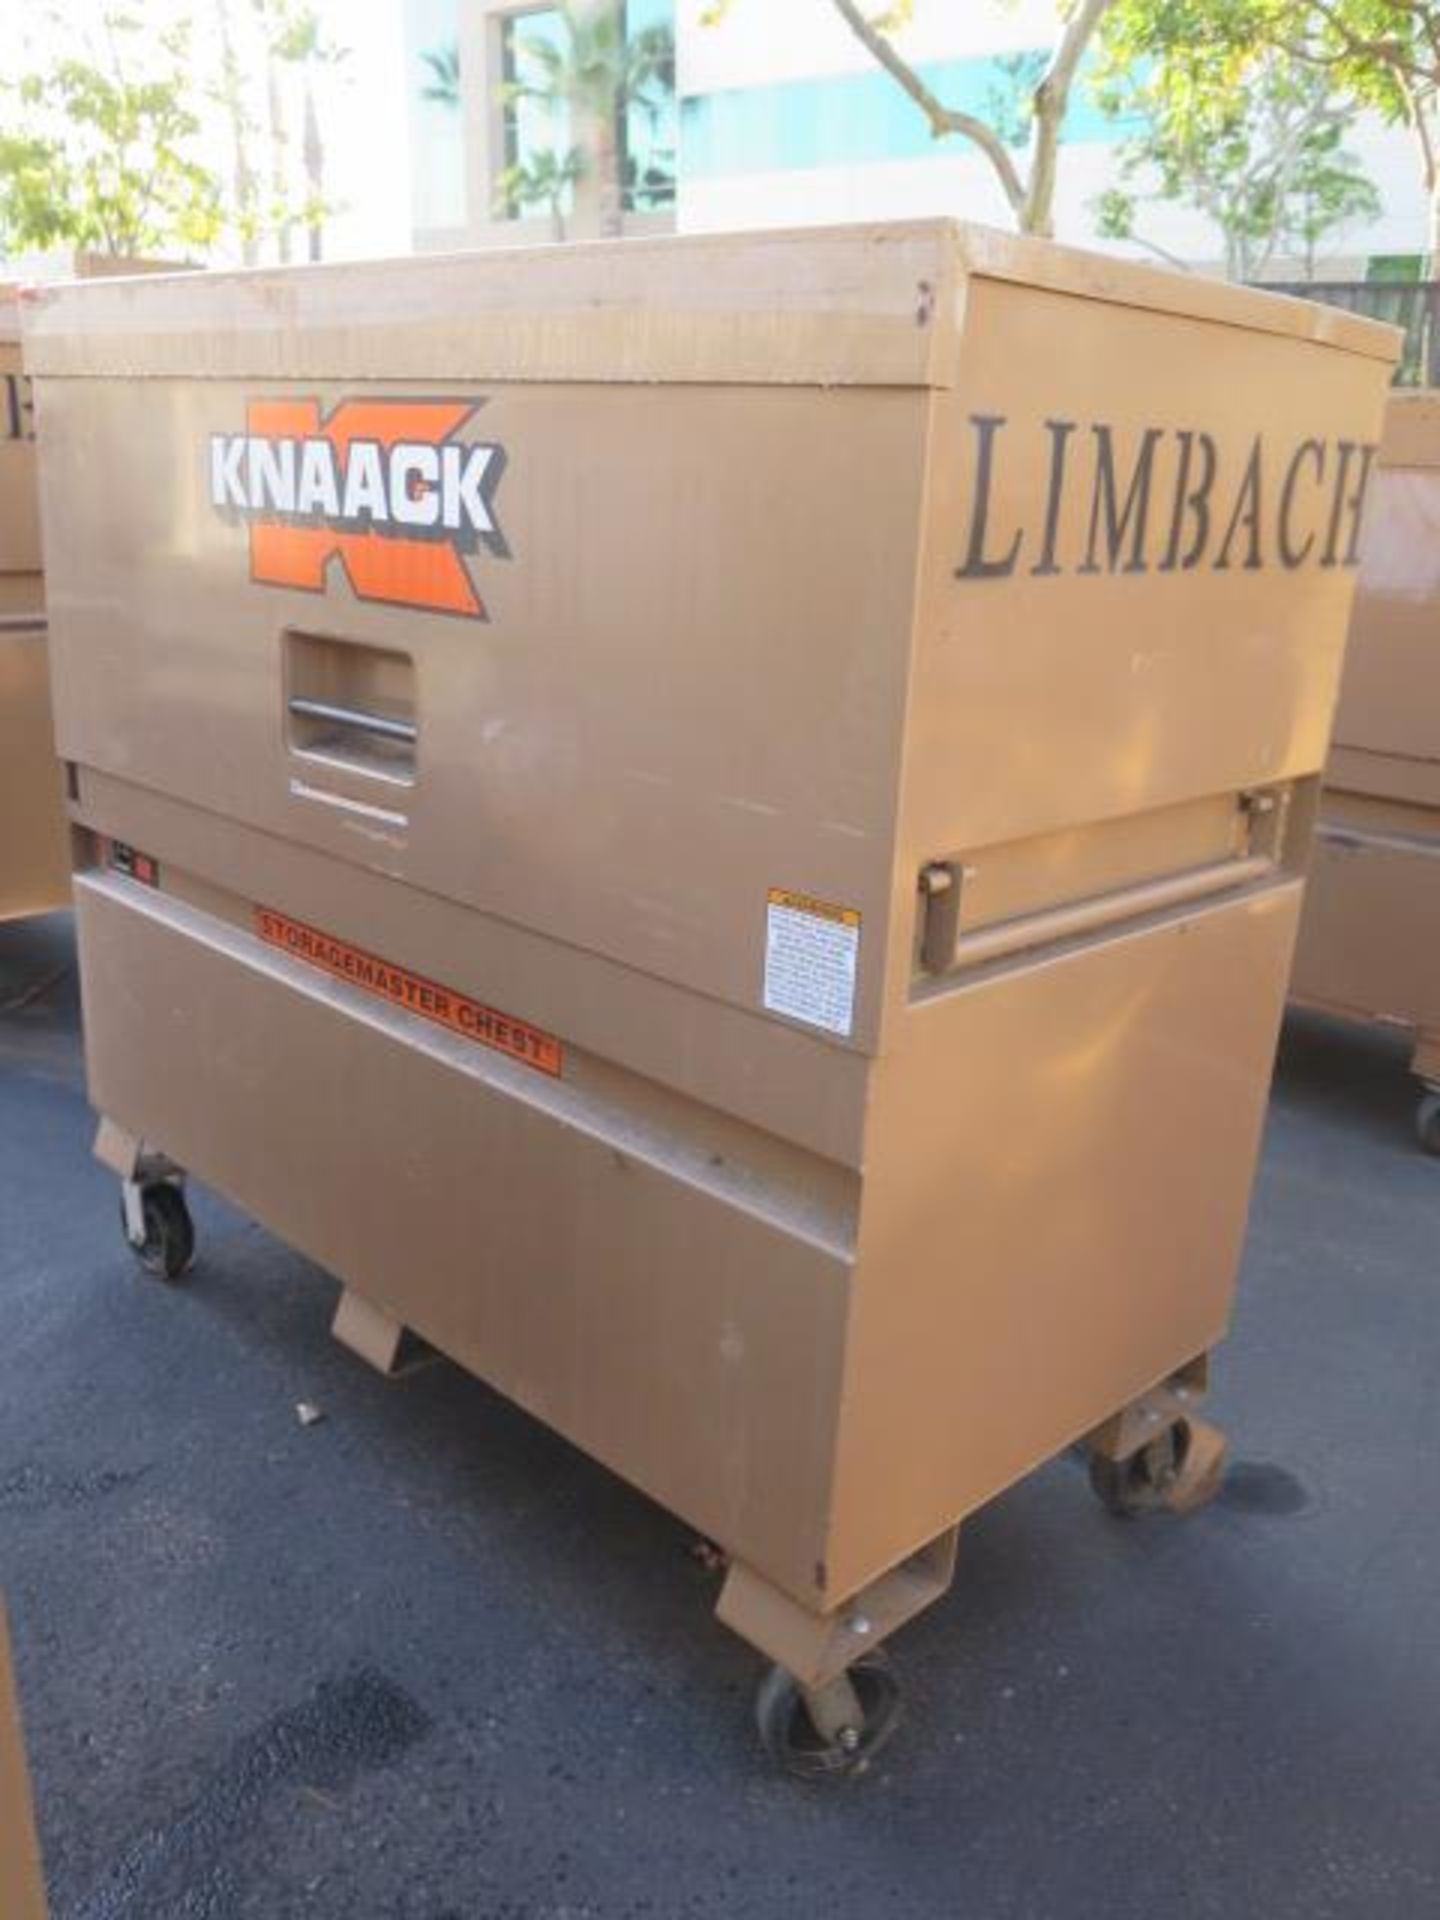 Knaack mdl. 89 Storagemaster Rolling Job Box (SOLD AS-IS - NO WARRANTY) - Image 2 of 10